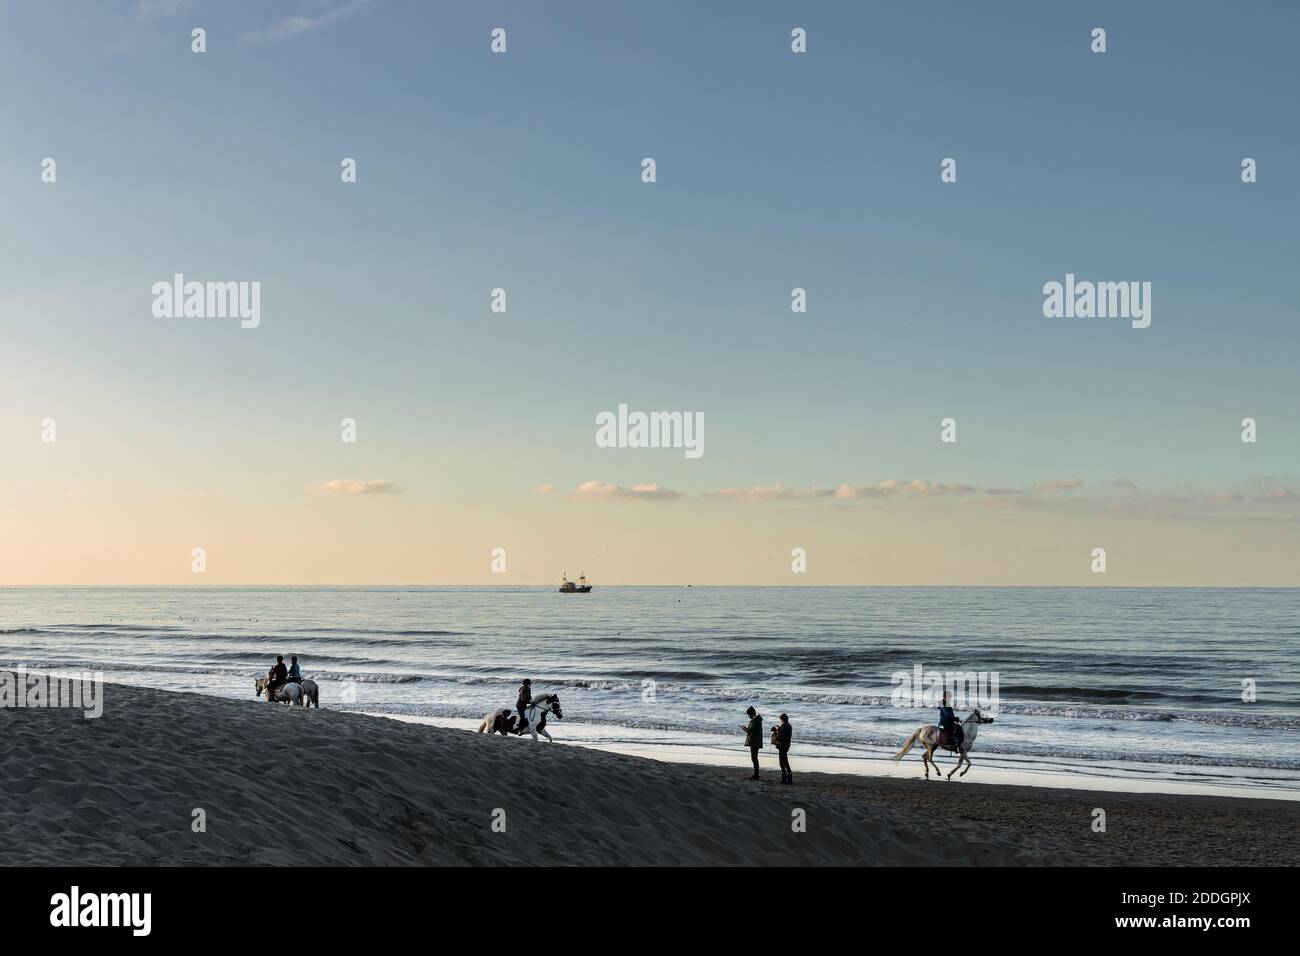 Oostduinkerke, Belgium - November 5, 2020: Horse riding on the beach at dusk Stock Photo